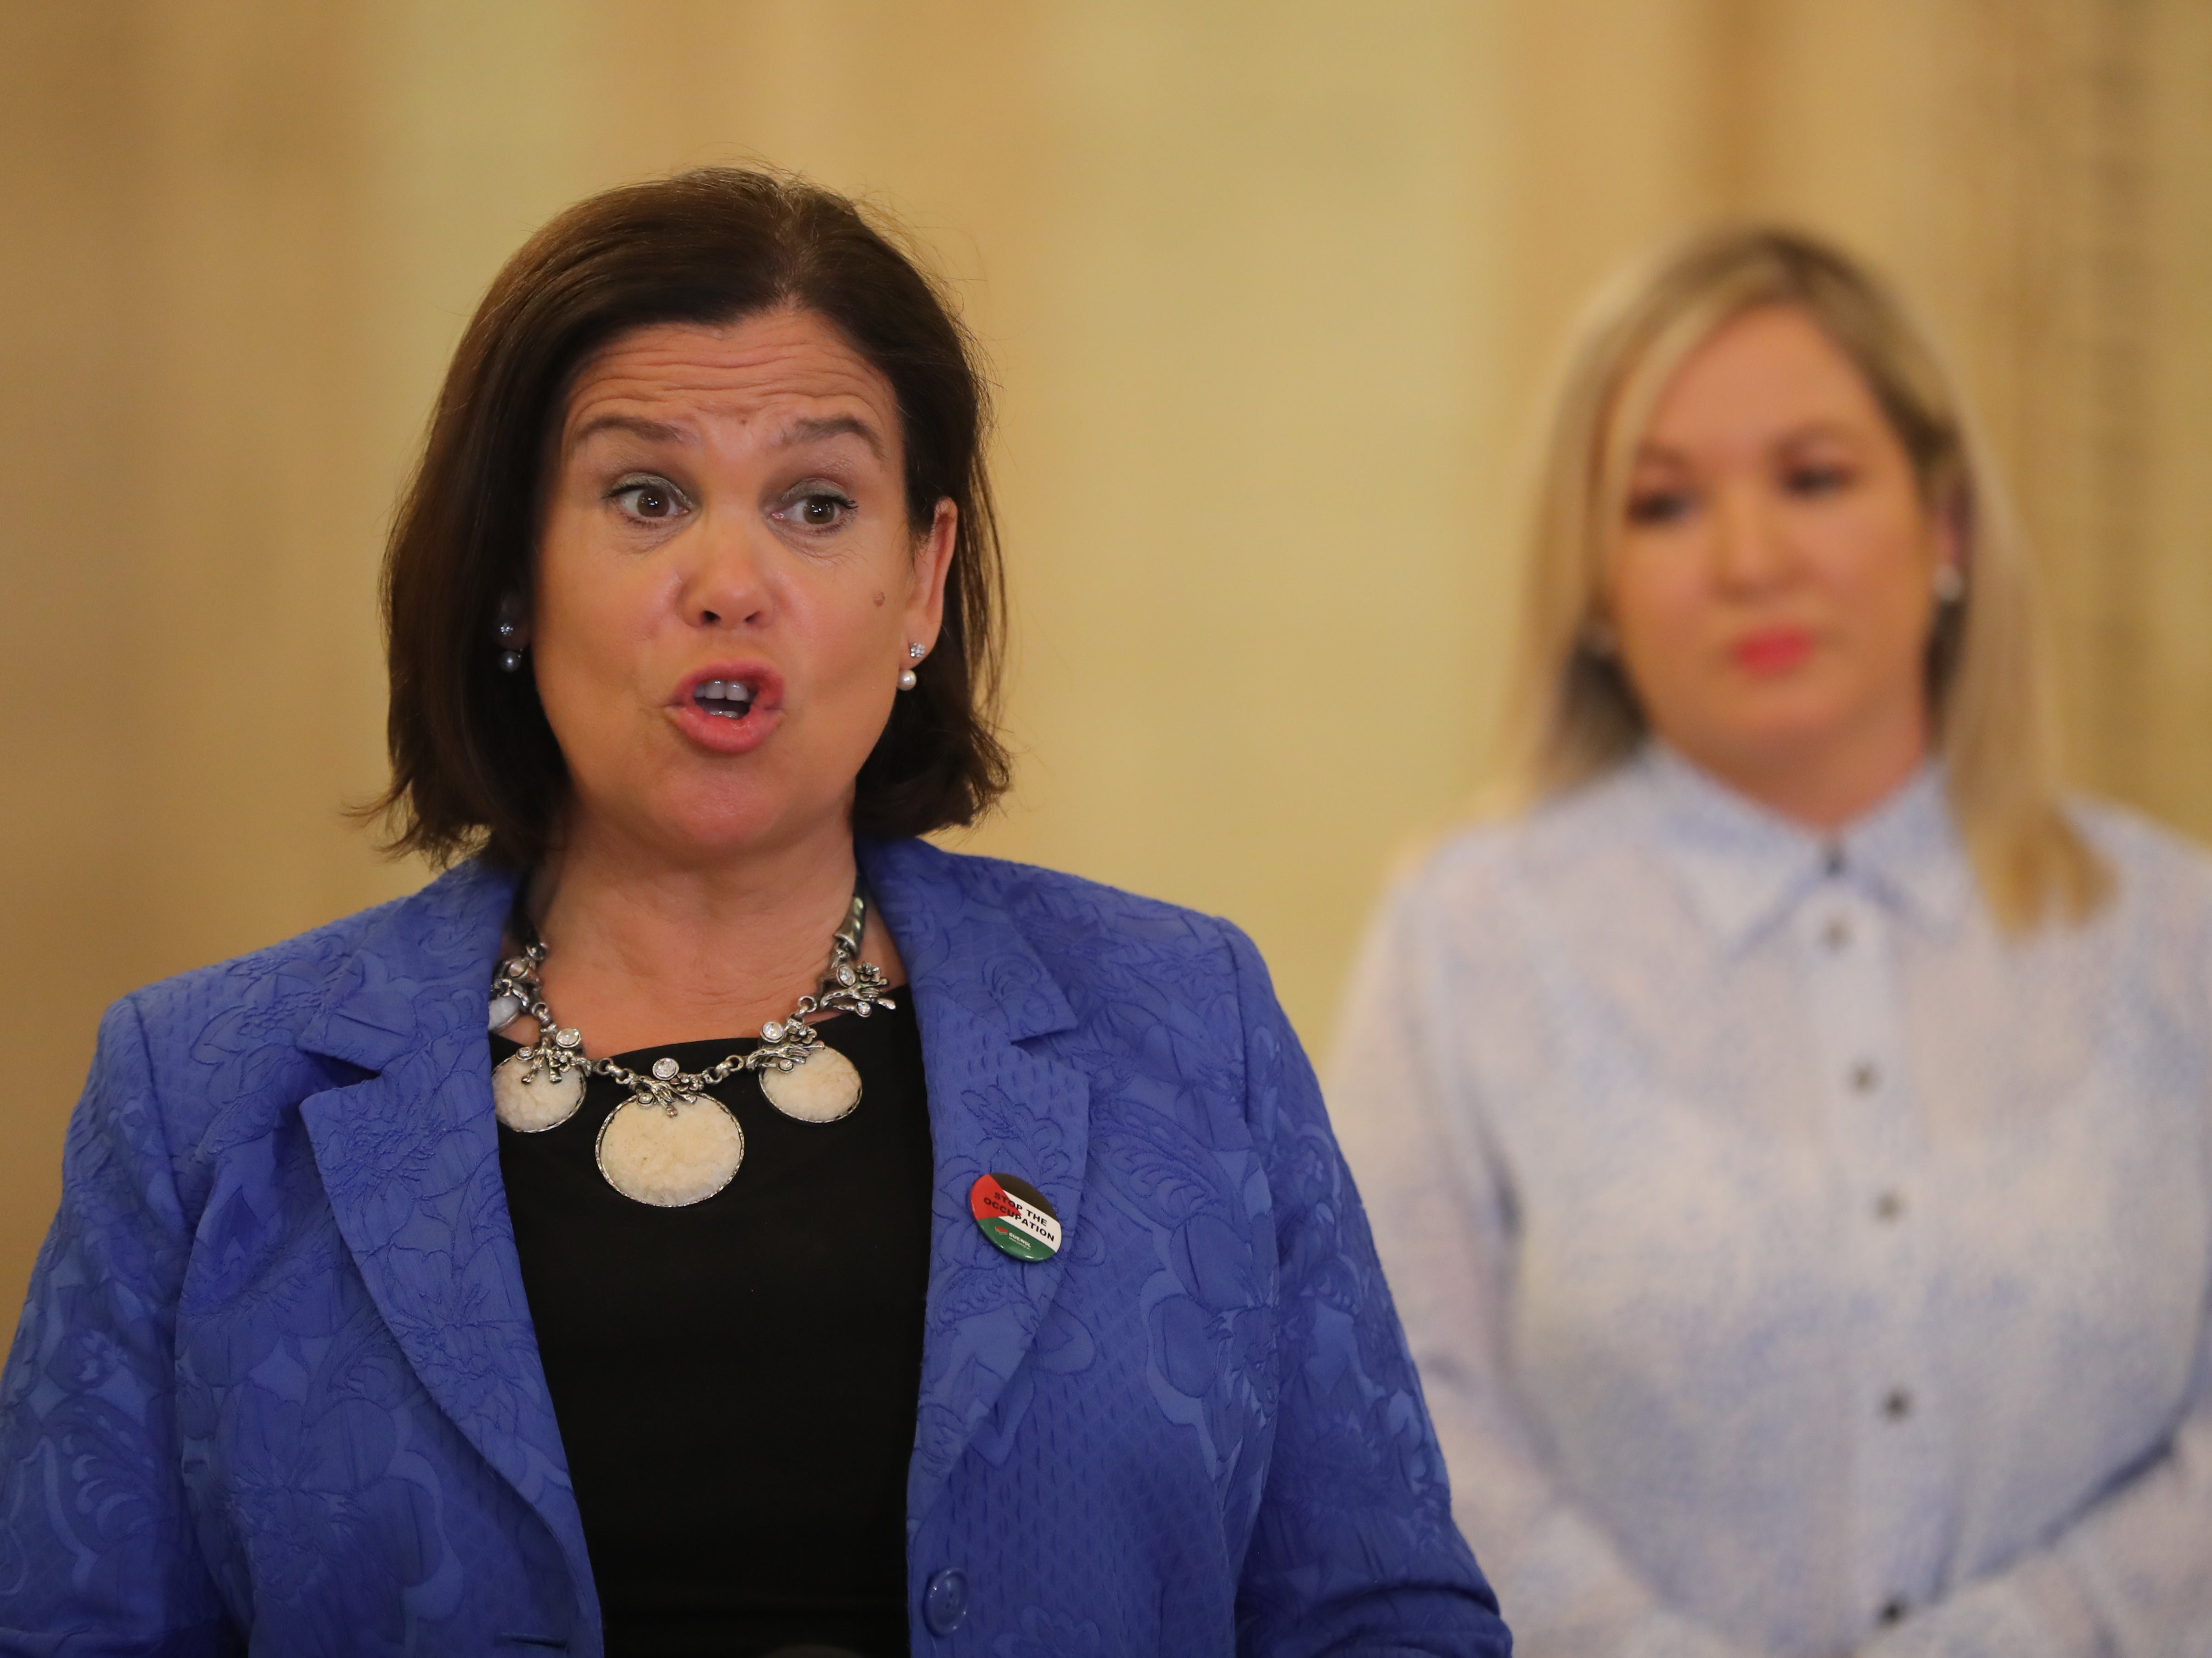 Sinn Fein leader Mary Lou McDonald (left) with deputy first minister Michelle O’Neill